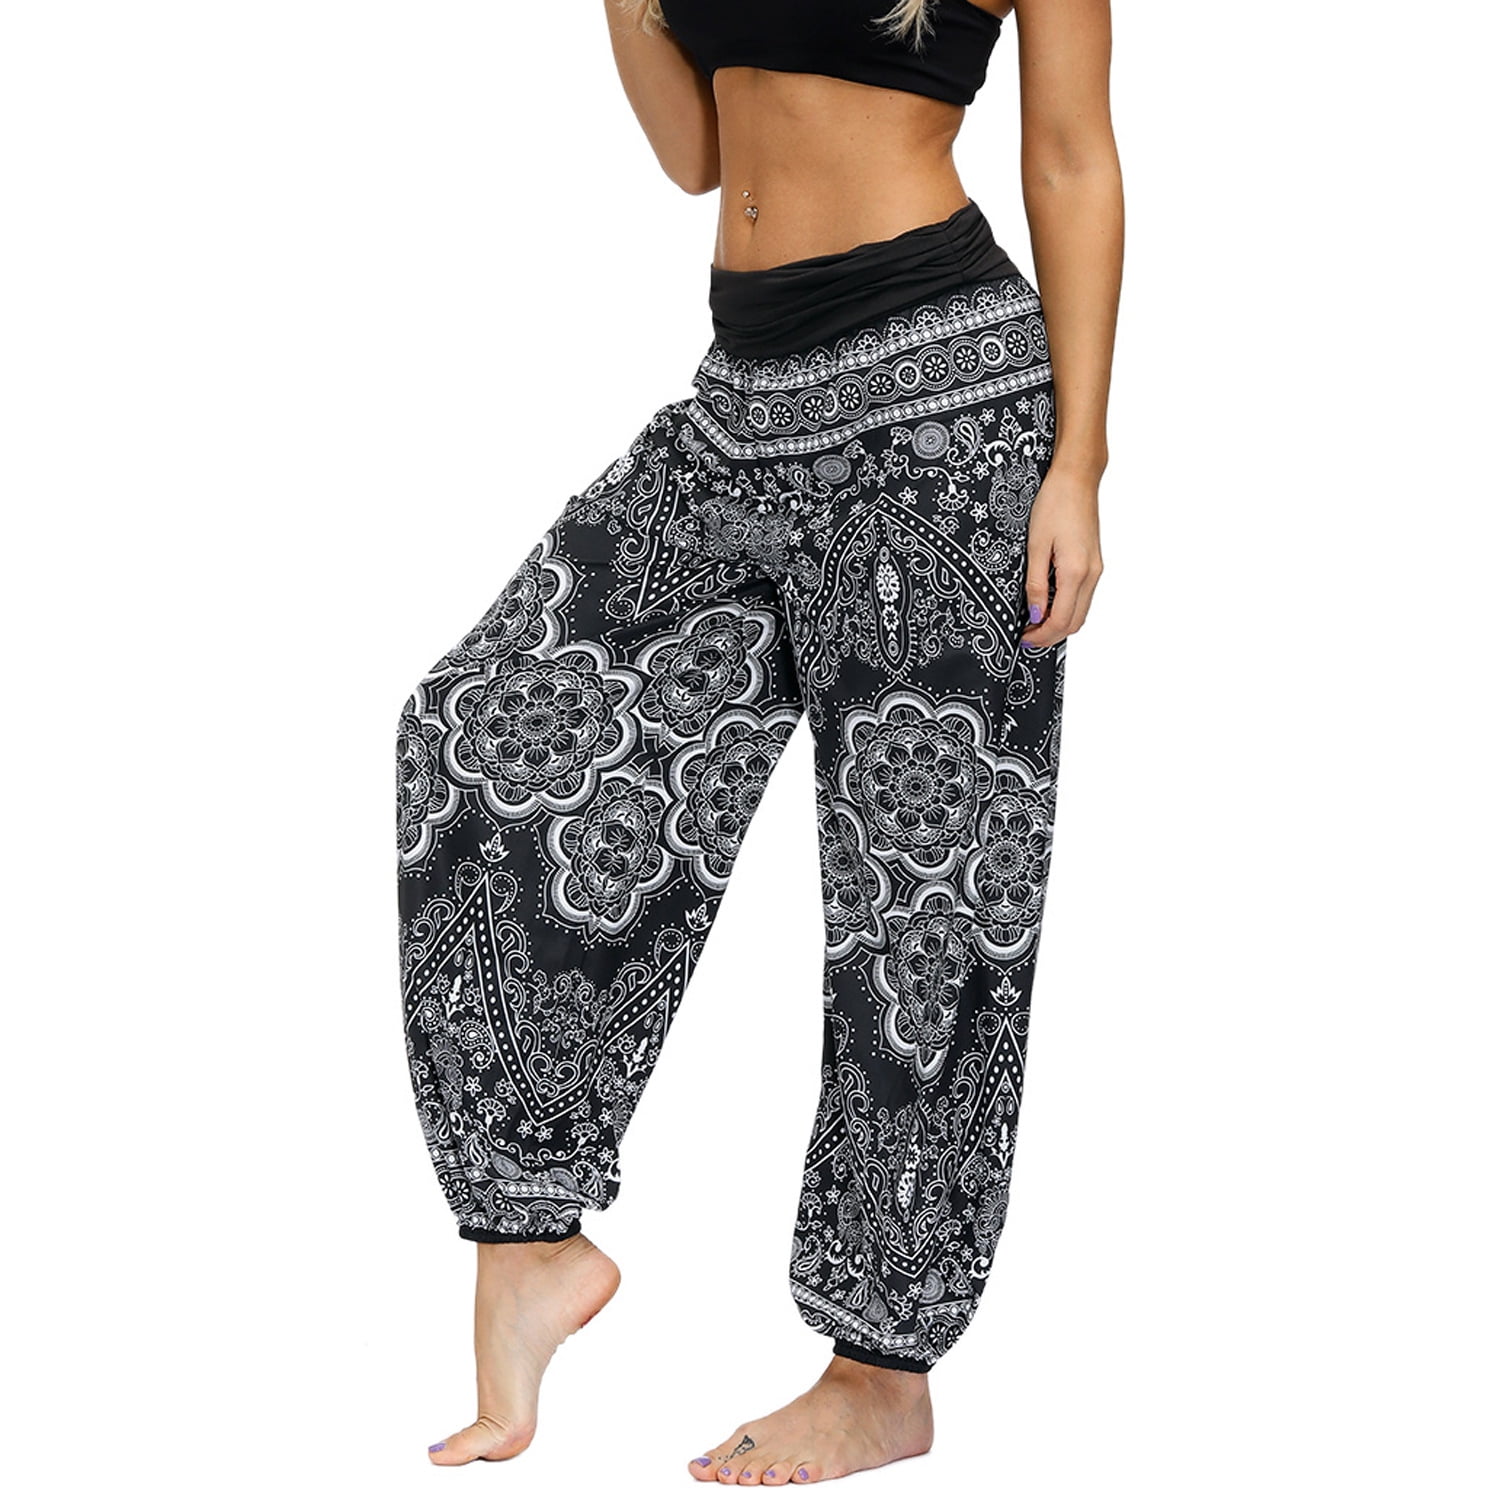 SWSMCLT Women's Boho Harem Yoga Pants Summer Bohemian Pants ...